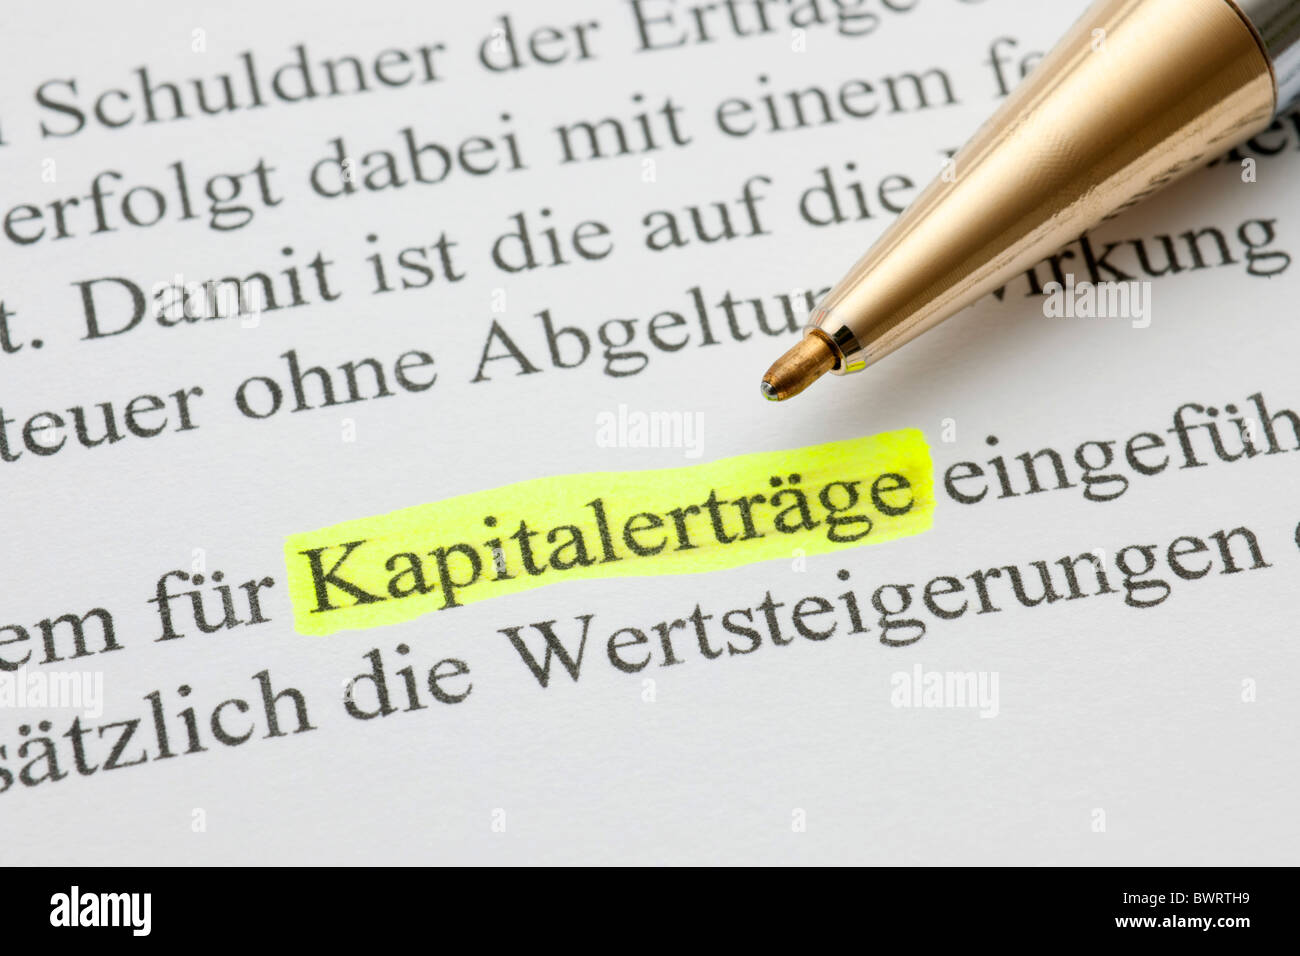 Kapitalertraege, German for Investment income Stock Photo